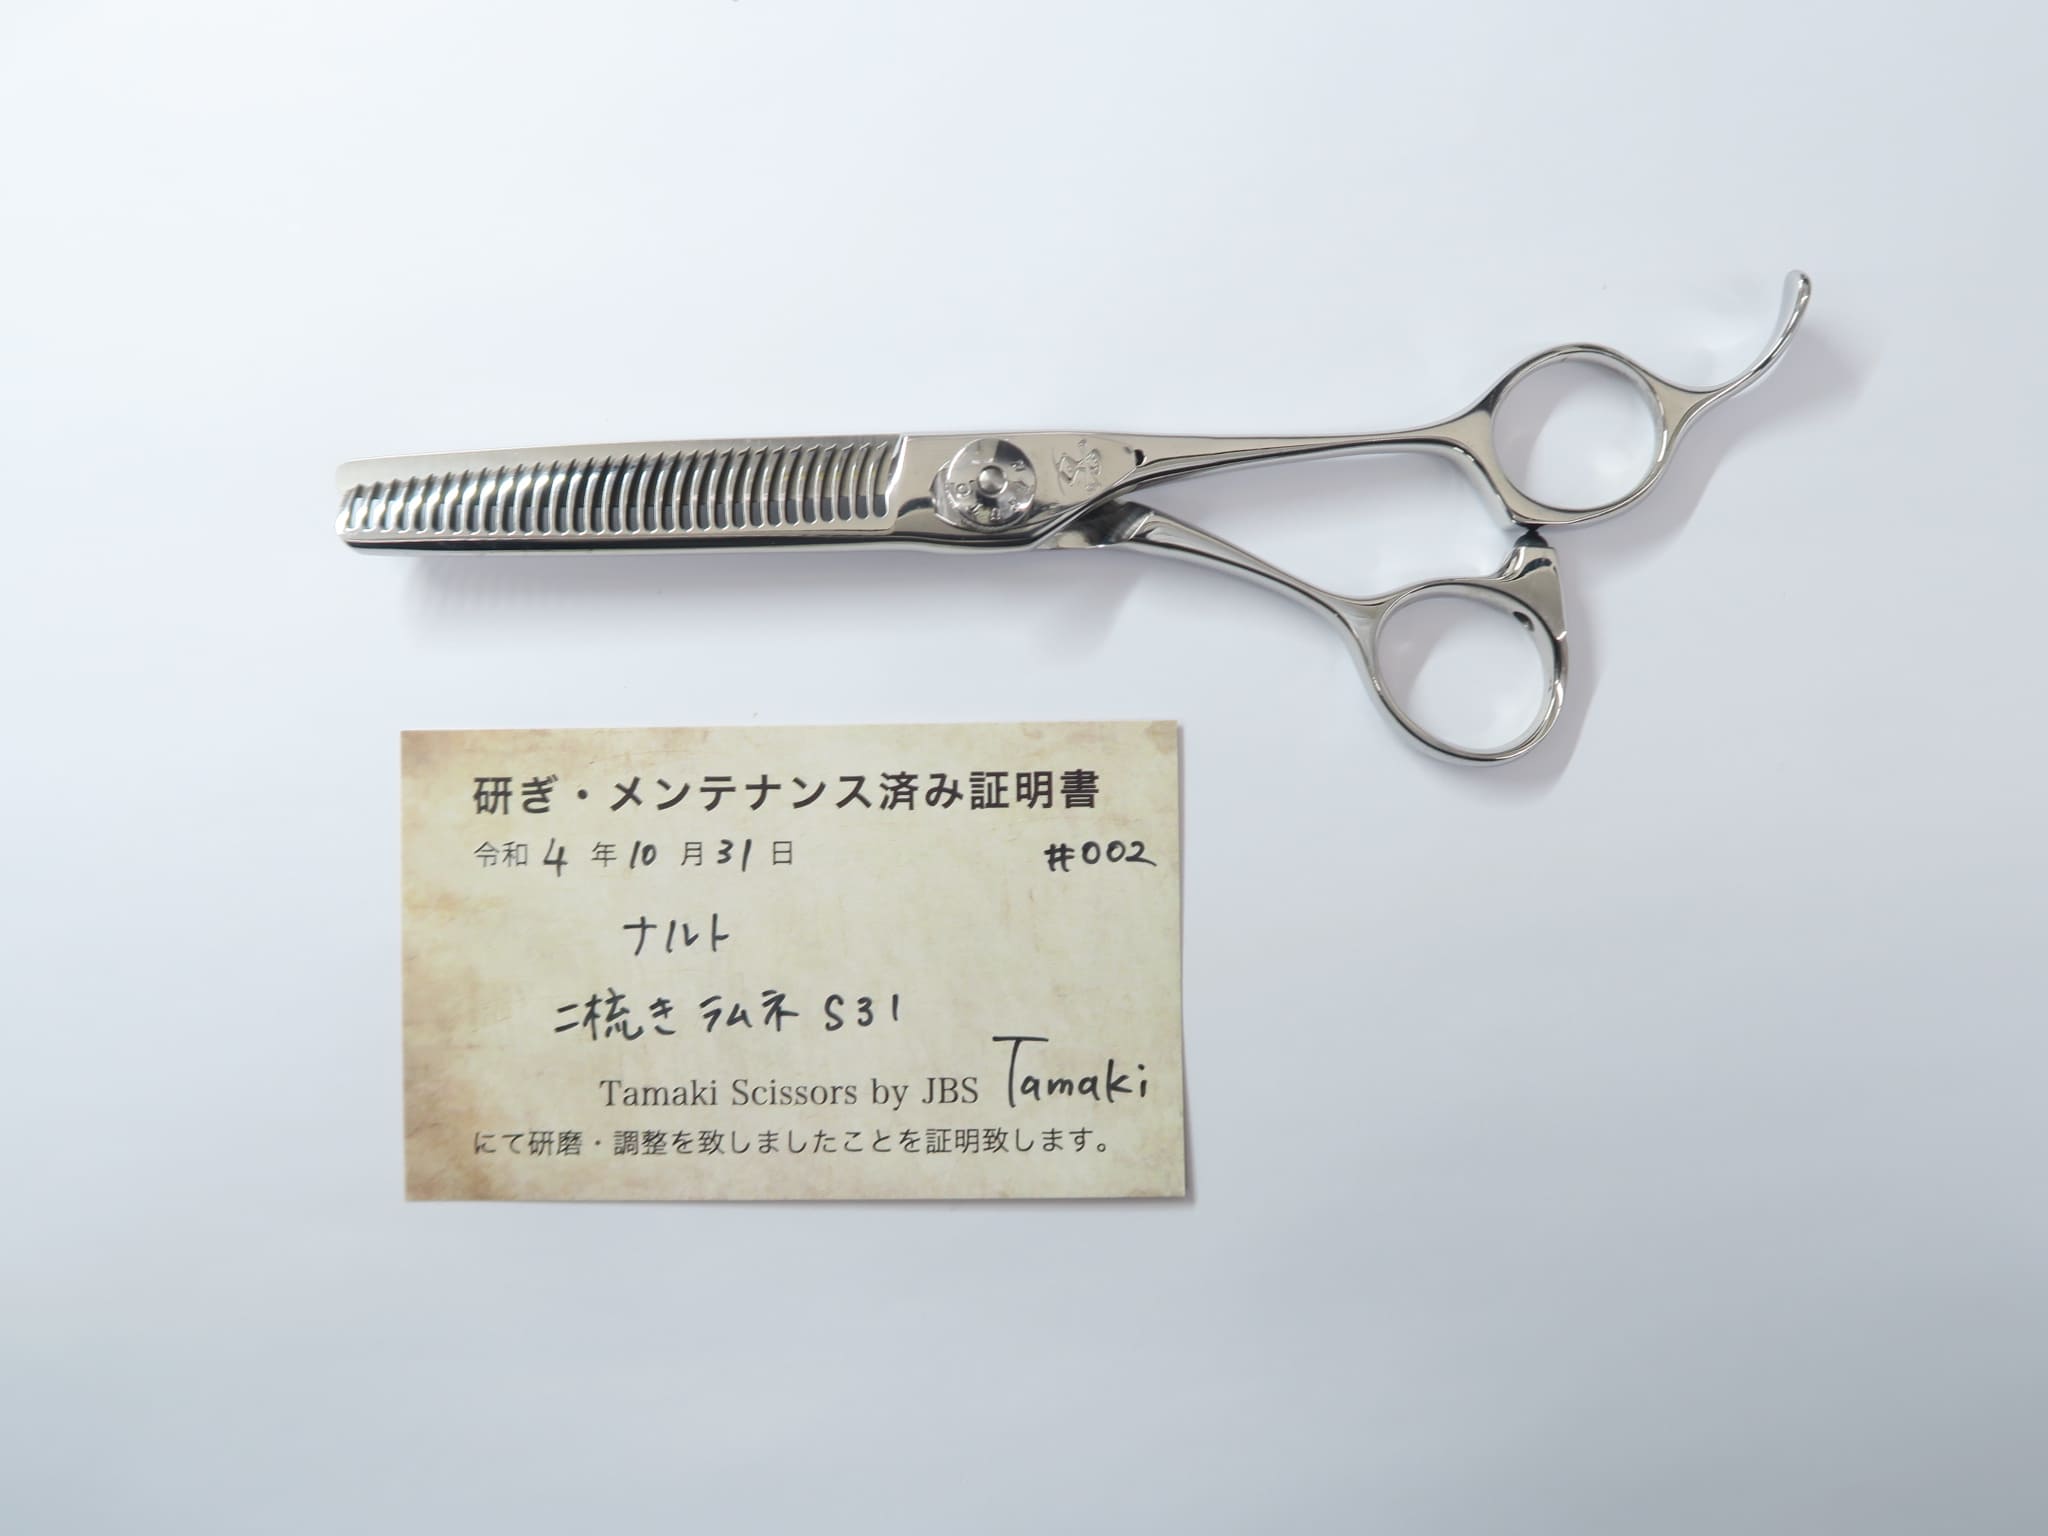 Bランク【ナルトシザー naruto scissors】 二梳きラムネS31 セニング